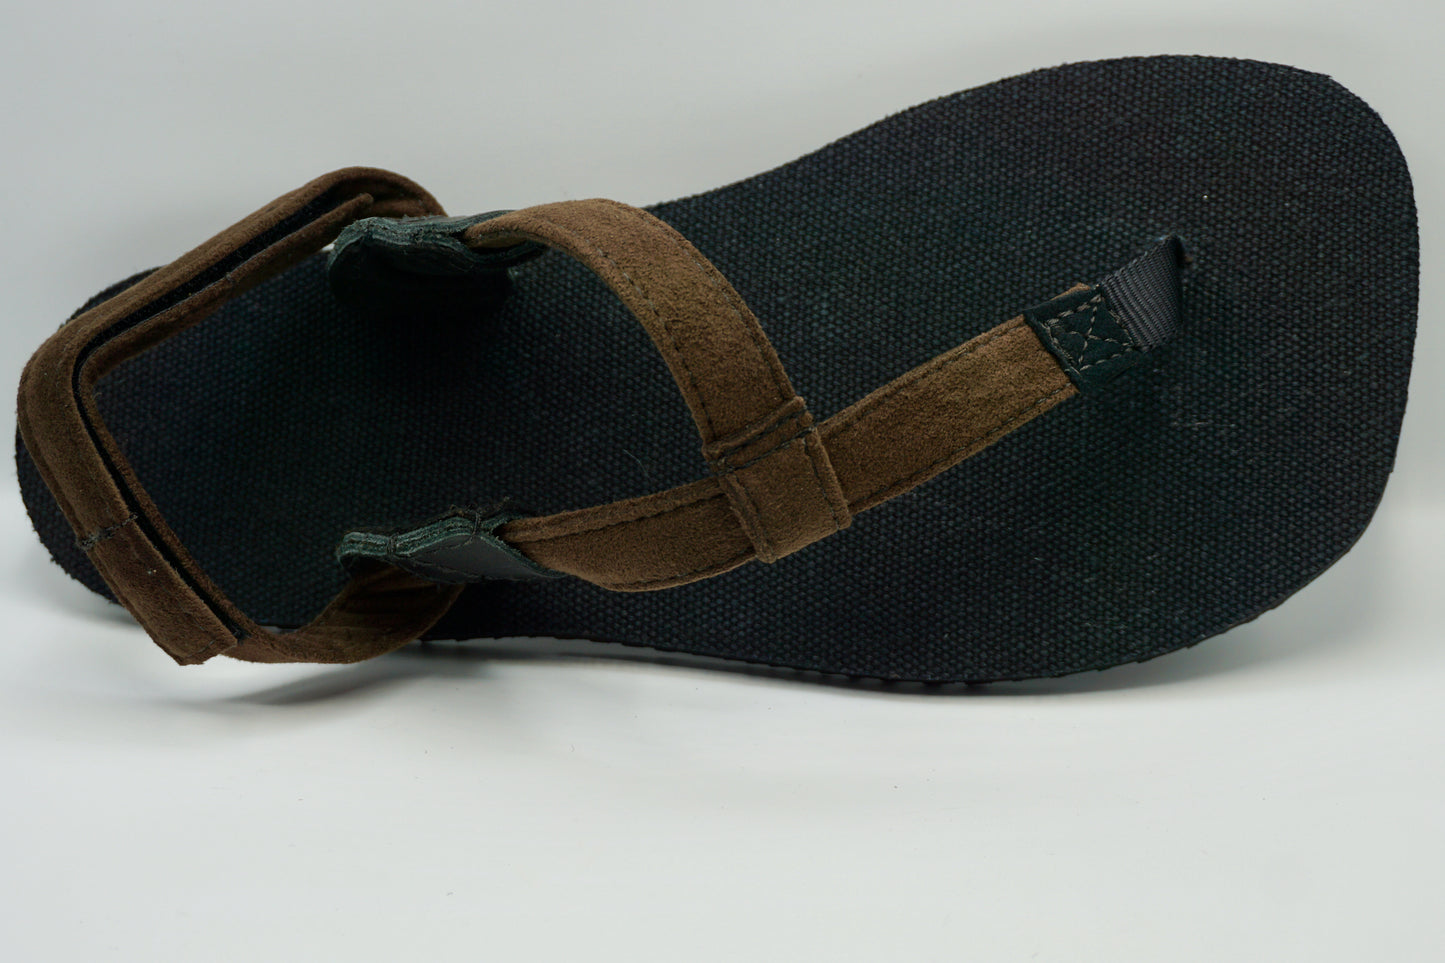 JackRabbit Sandals Barefoot Black Hemp Footbed